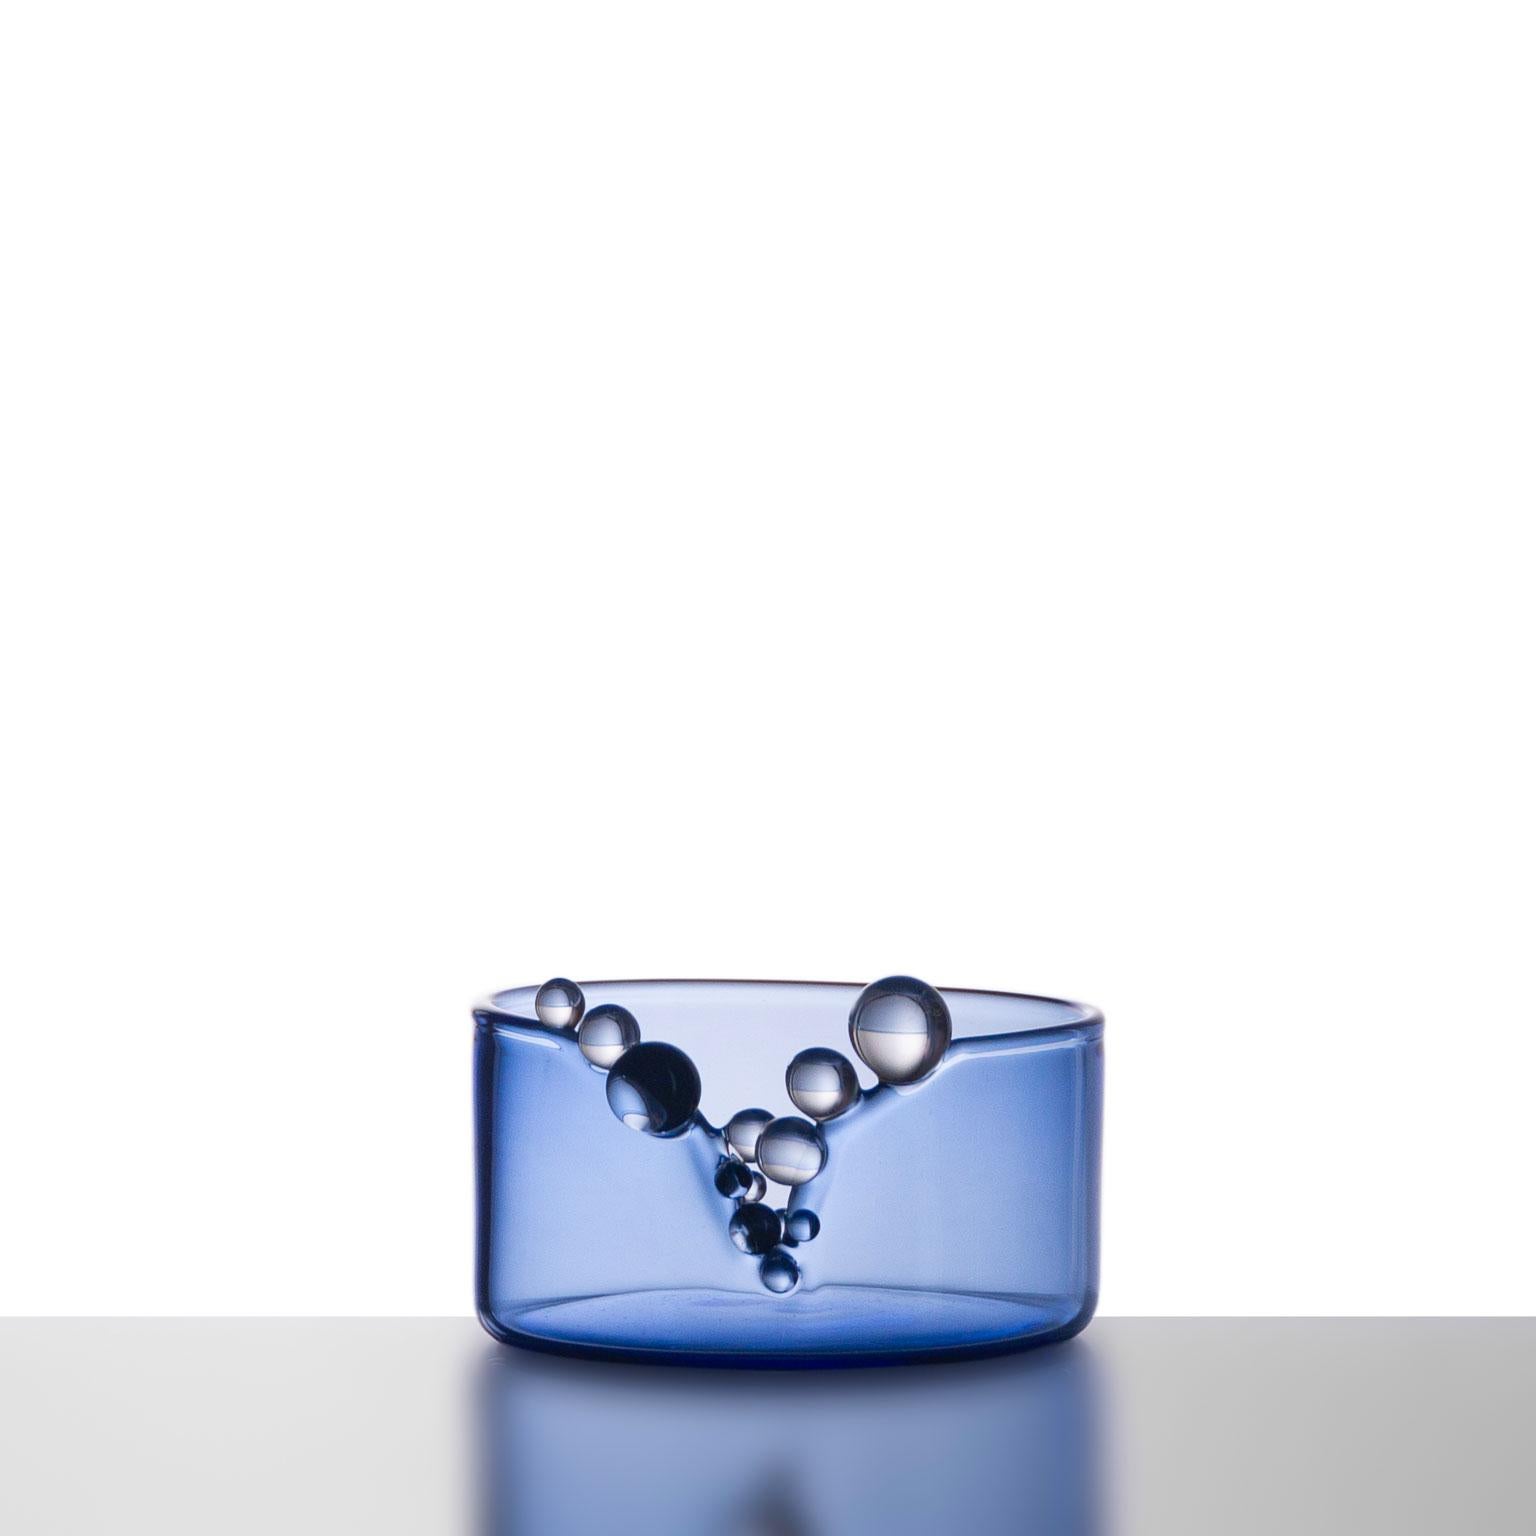 Hand Blown Glass Vase Bubble Kintsugi #Blue 2023 by Simone Crestani

Bubble Kintsugi #Blue

Artist: Simone Crestani
Material: Borosilicate glass
Technique: Flameworking
Unique piece
Year: 2023
Measures: Height 2.36'', width 4.52'', depth 3.93''